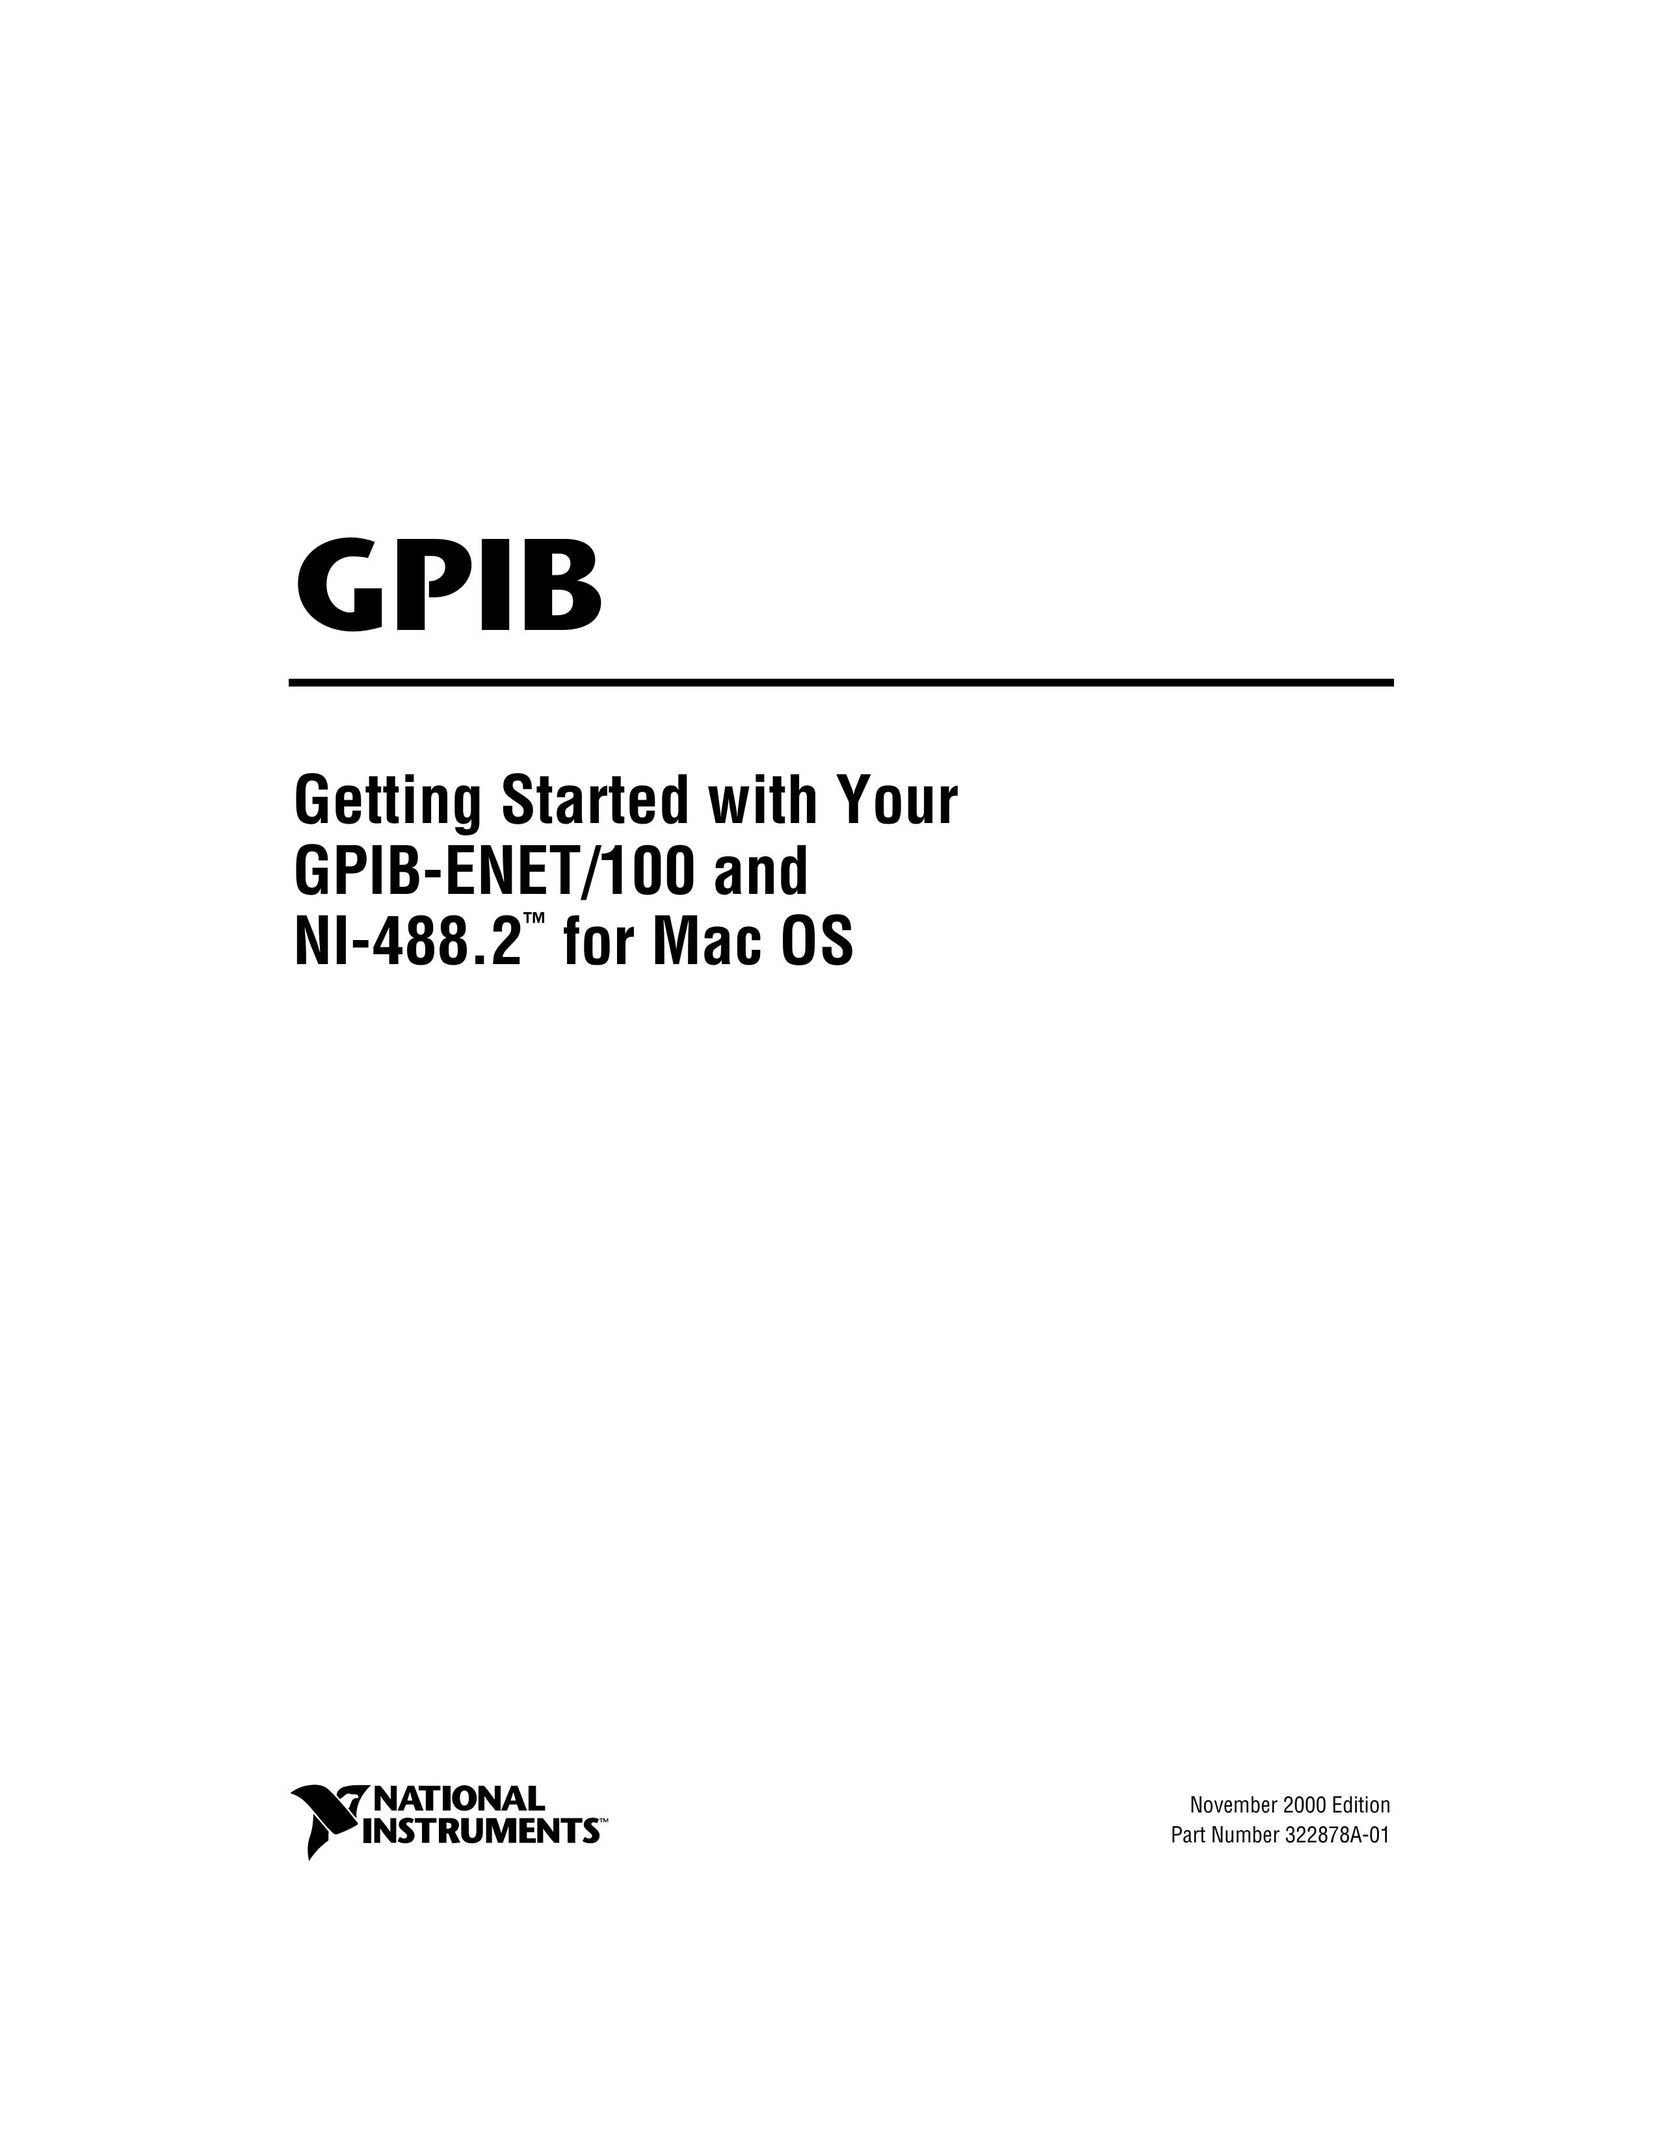 National Instruments GPIB-ENET/100 Network Hardware User Manual